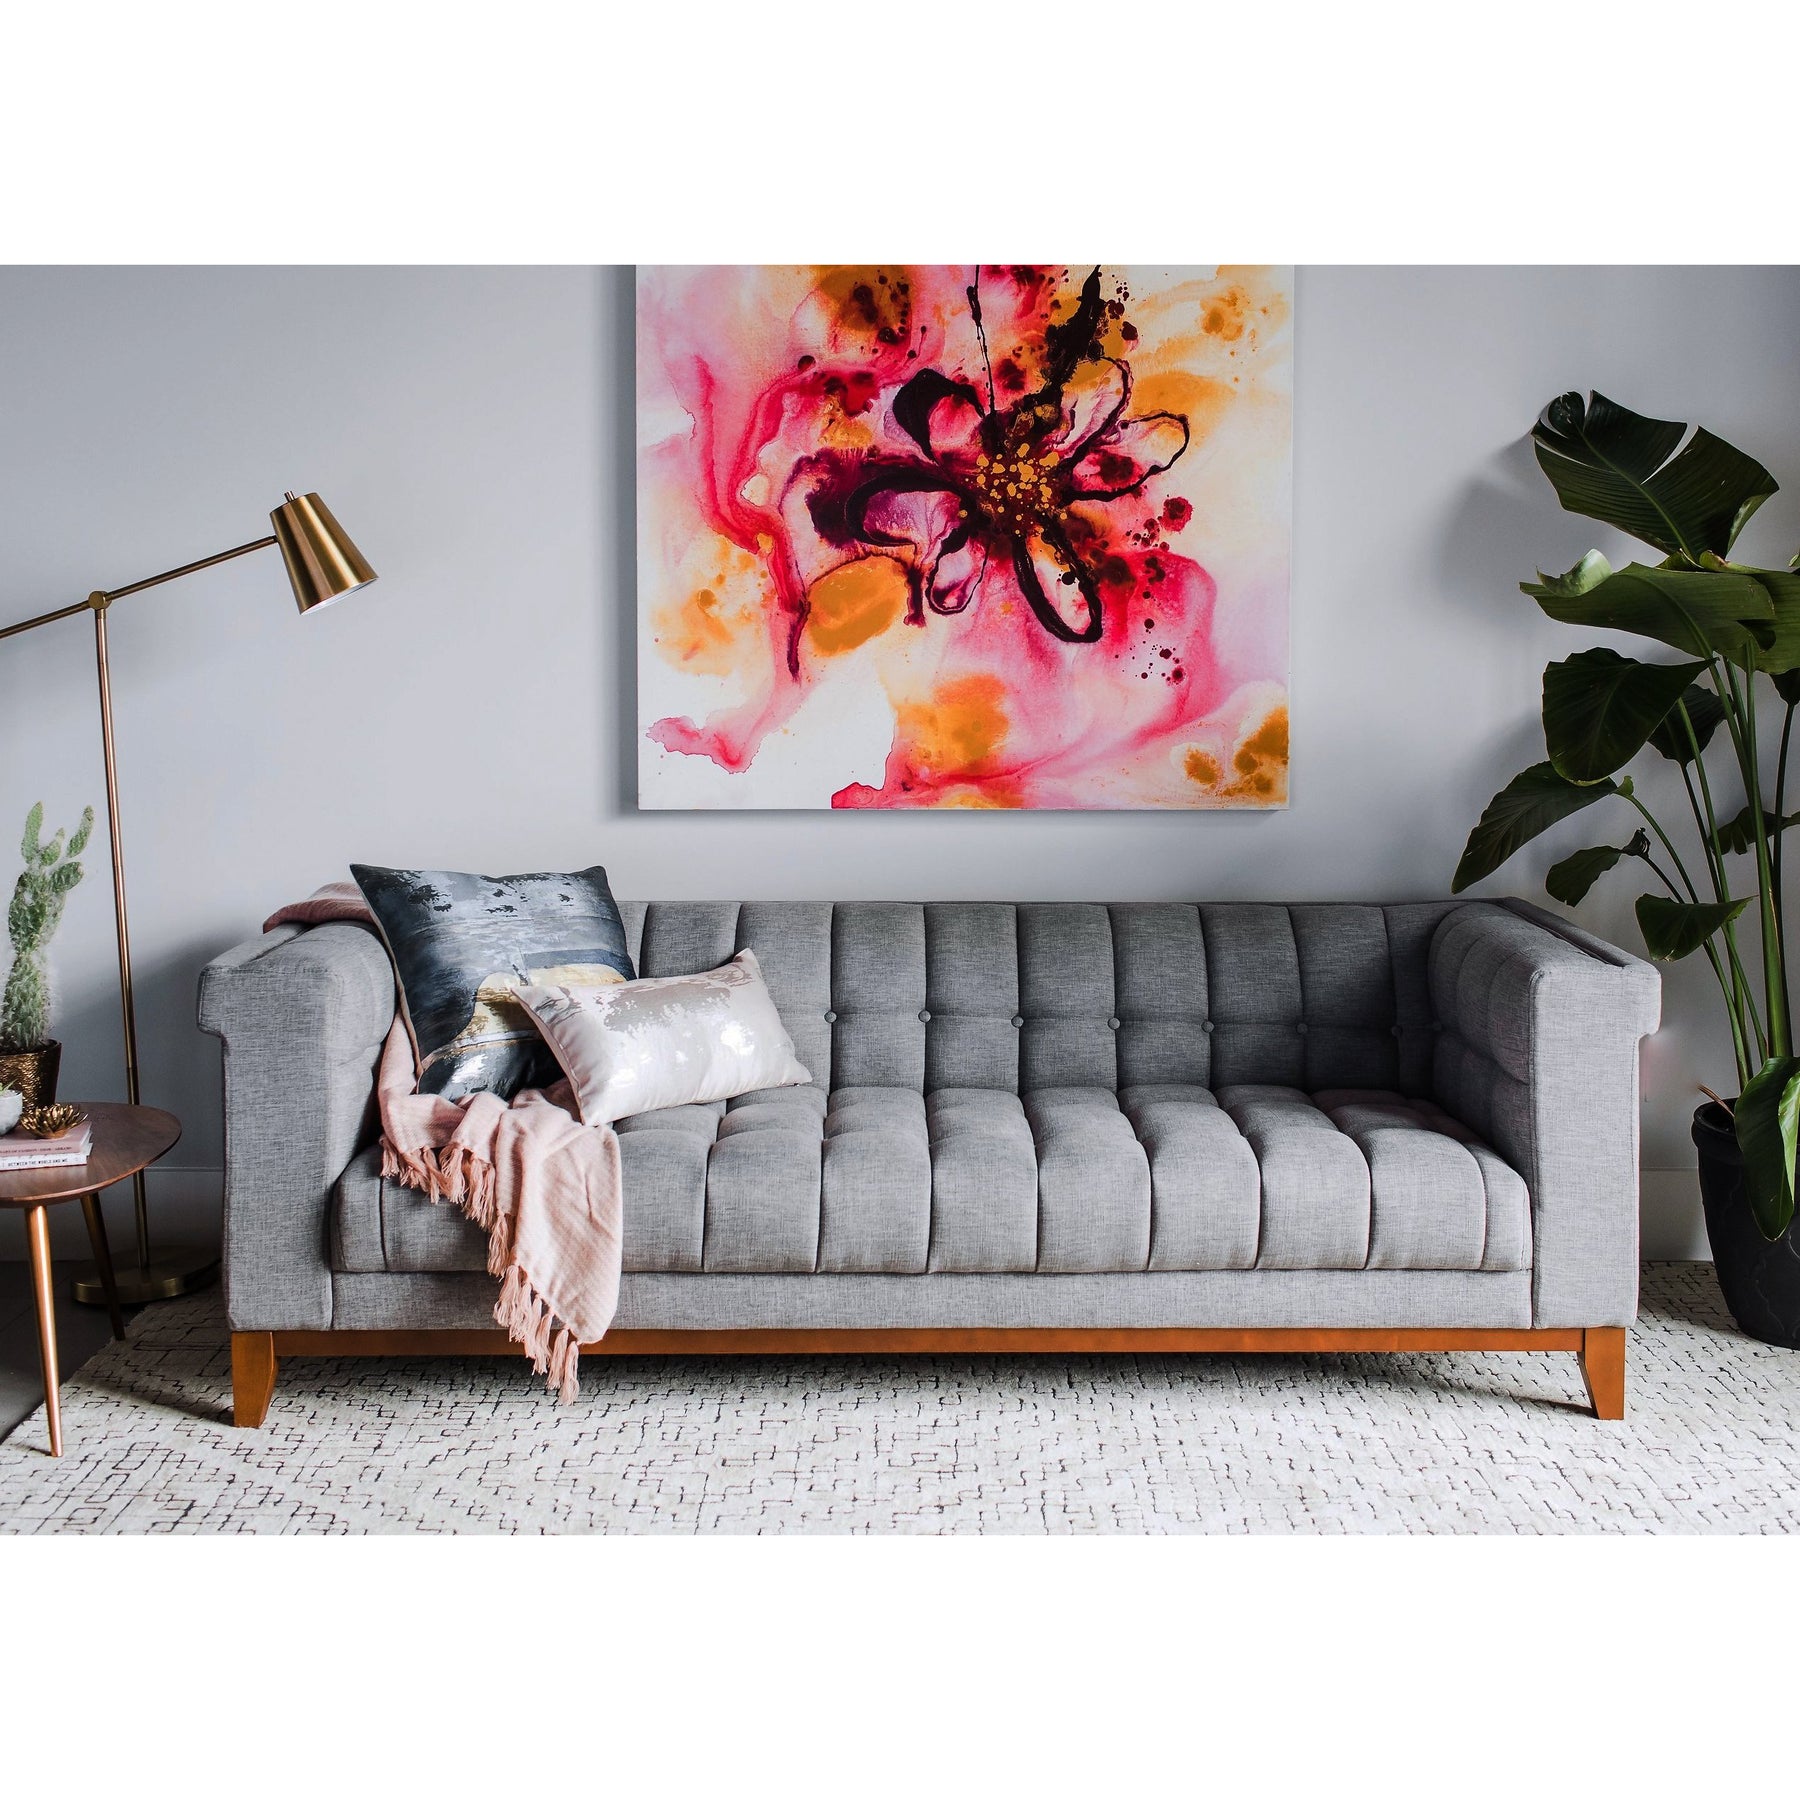 Edloe Finch Nest Modern Sofa